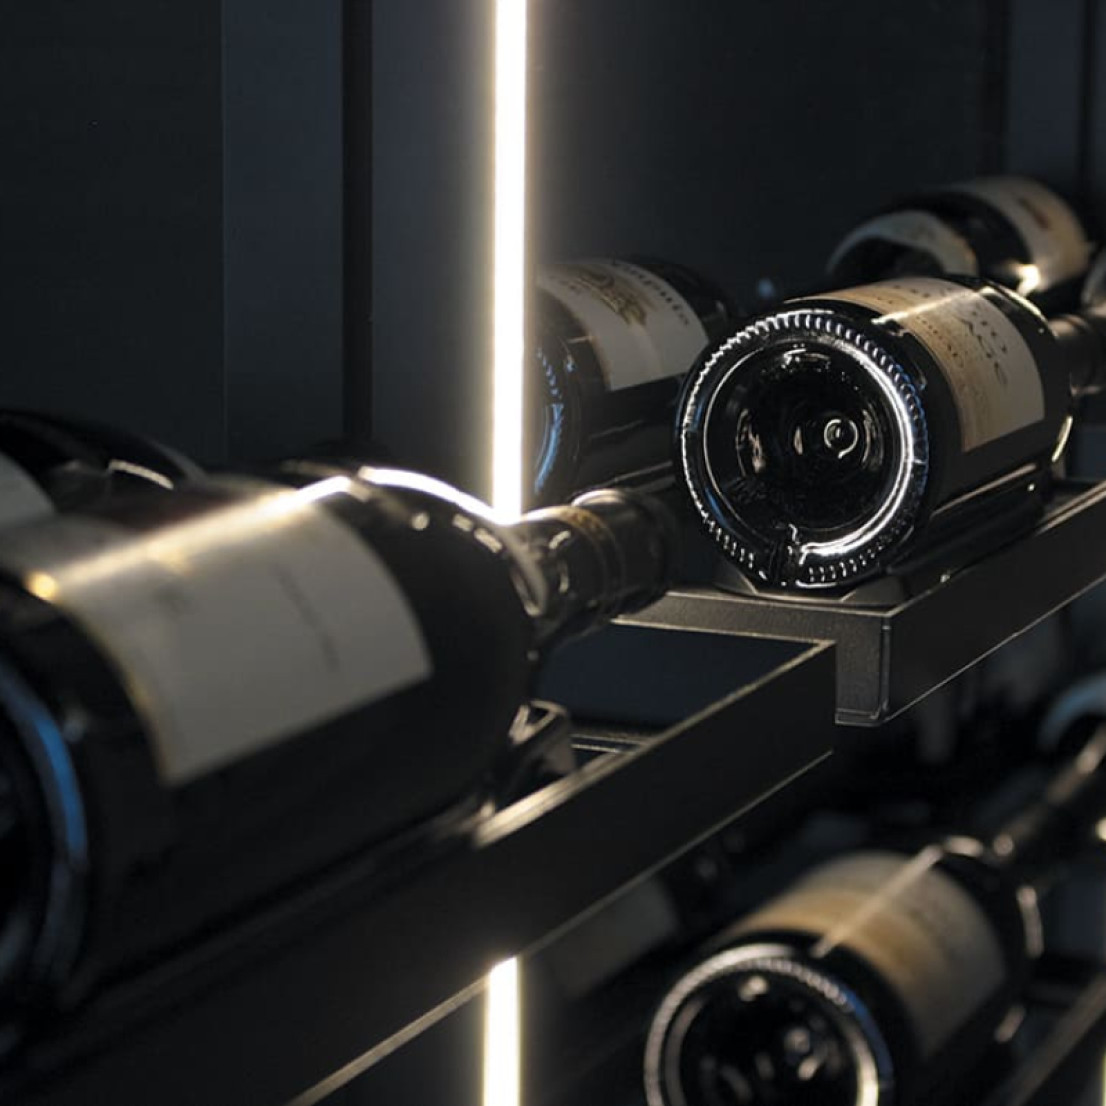 Backlit wine cellar storage in black metal to showcase your most beautiful bottles.